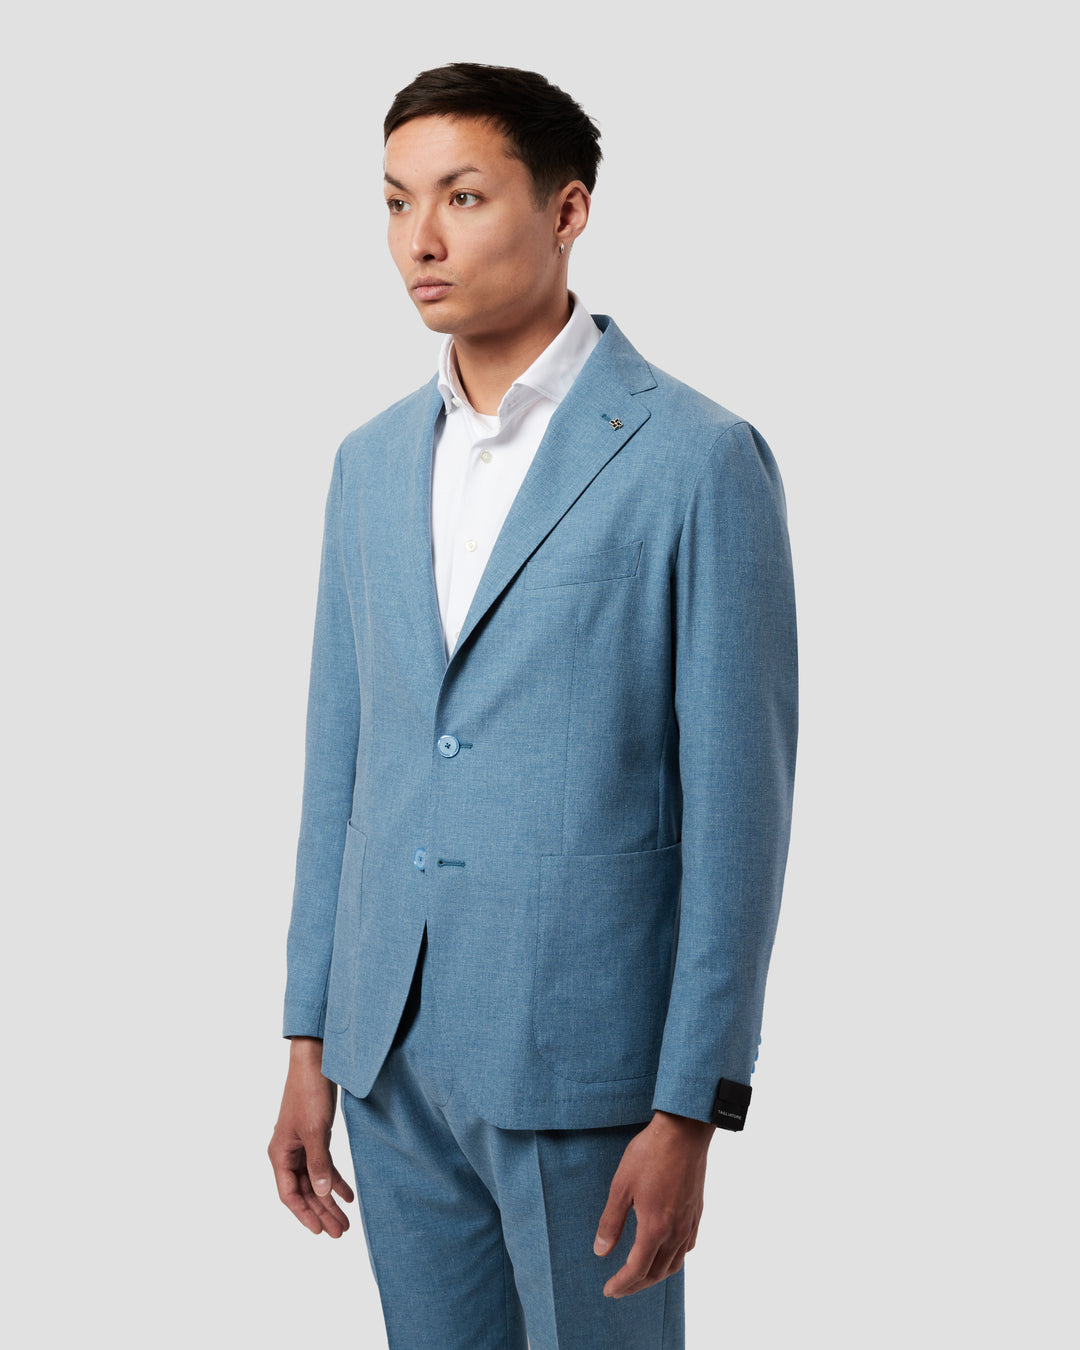 ADAKAR Suit  - Powder blue